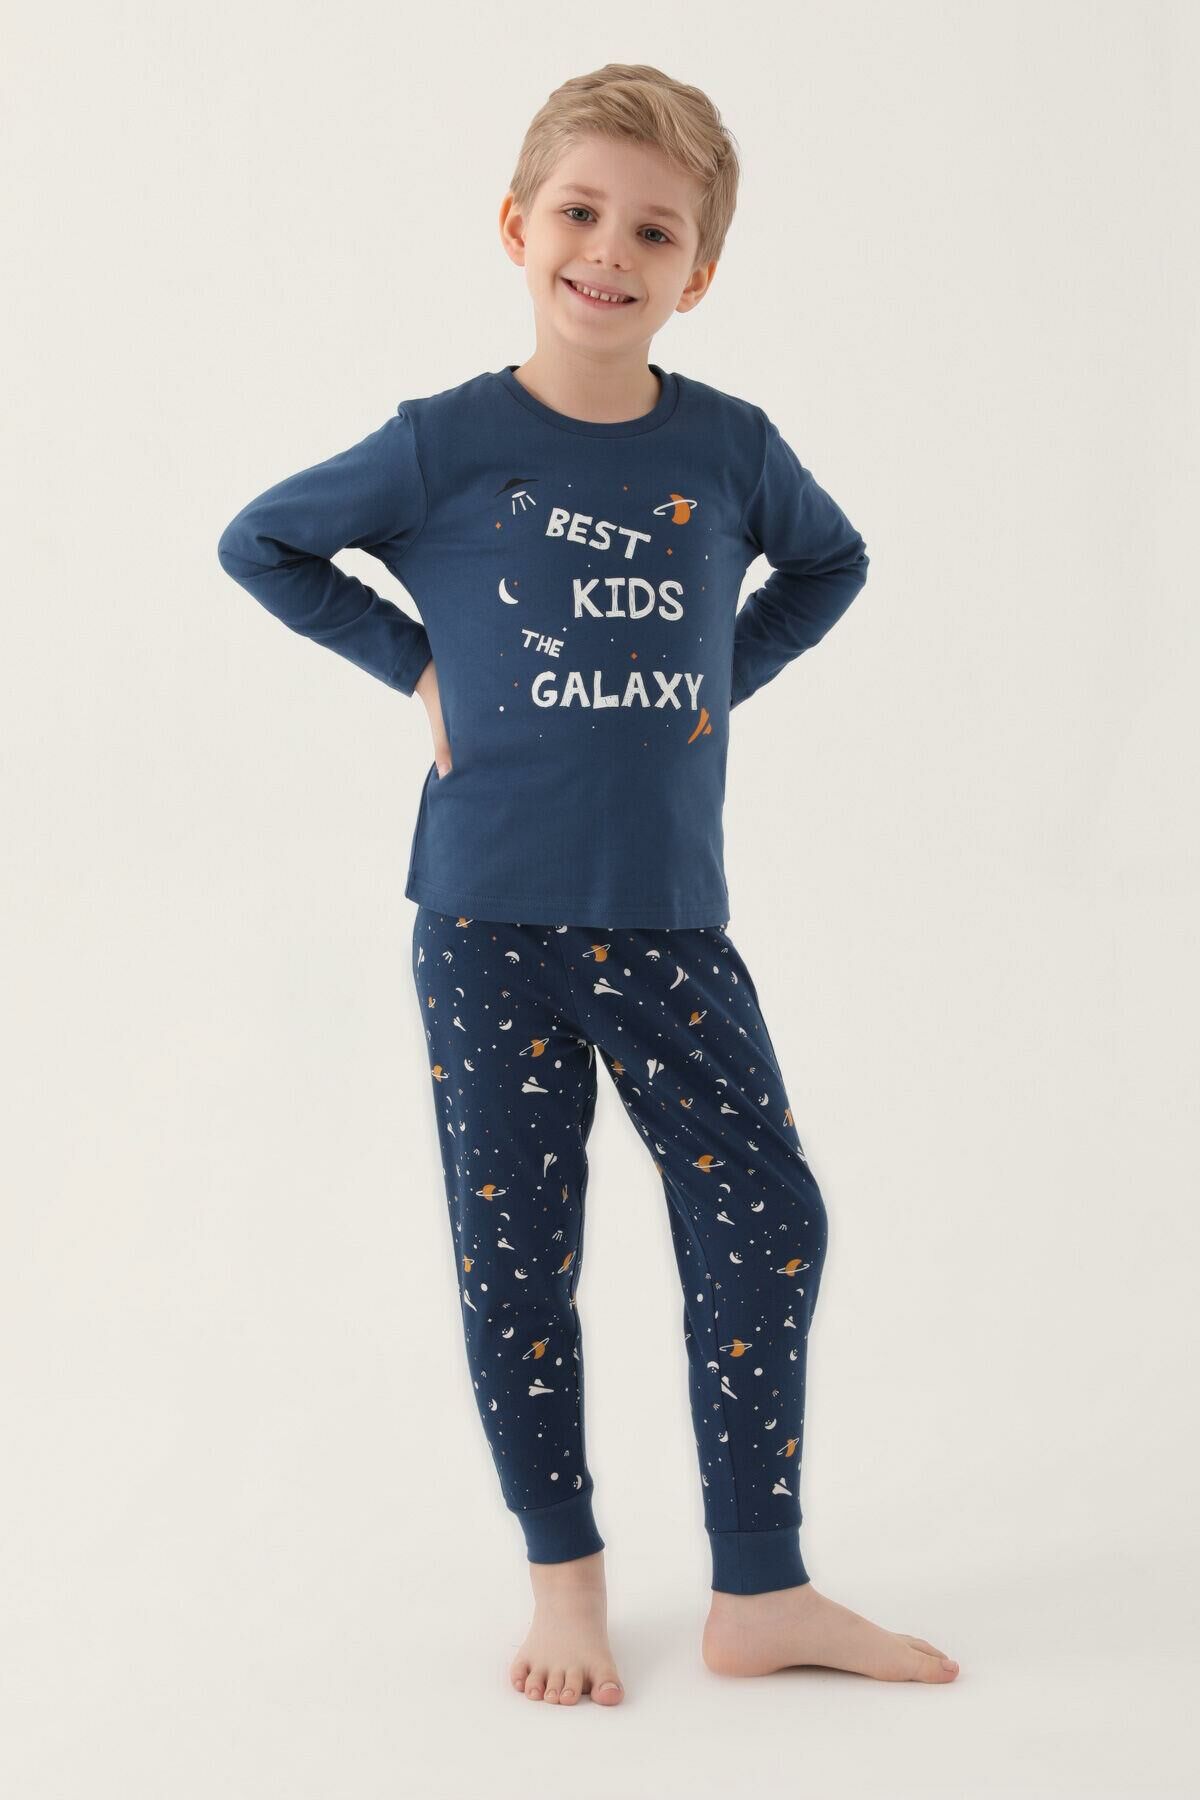 Roly Poly 3177 Best Kids The Galaxy Erkek Çocuk Uzun Kol Pijama Takım